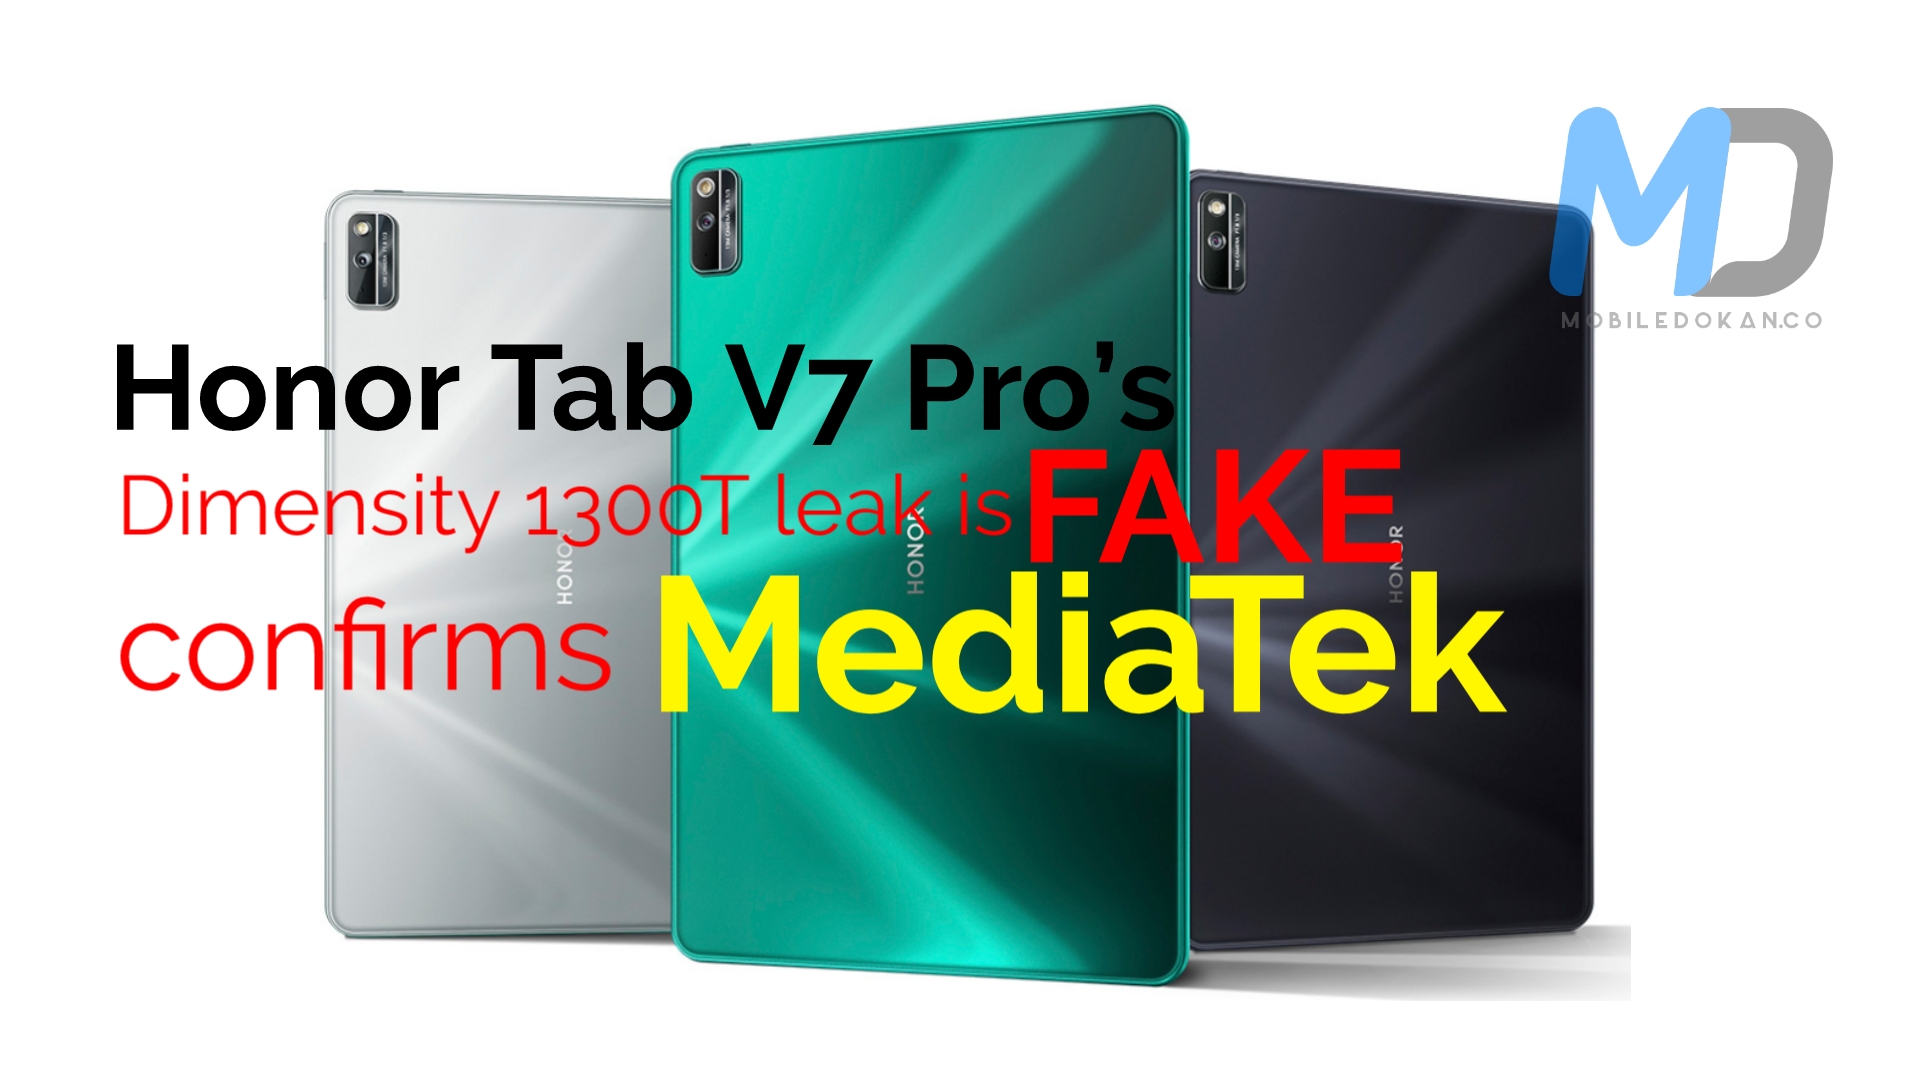 Honor Tab V7 Pro’s Dimensity 1300T leak is fake, confirms MediaTek